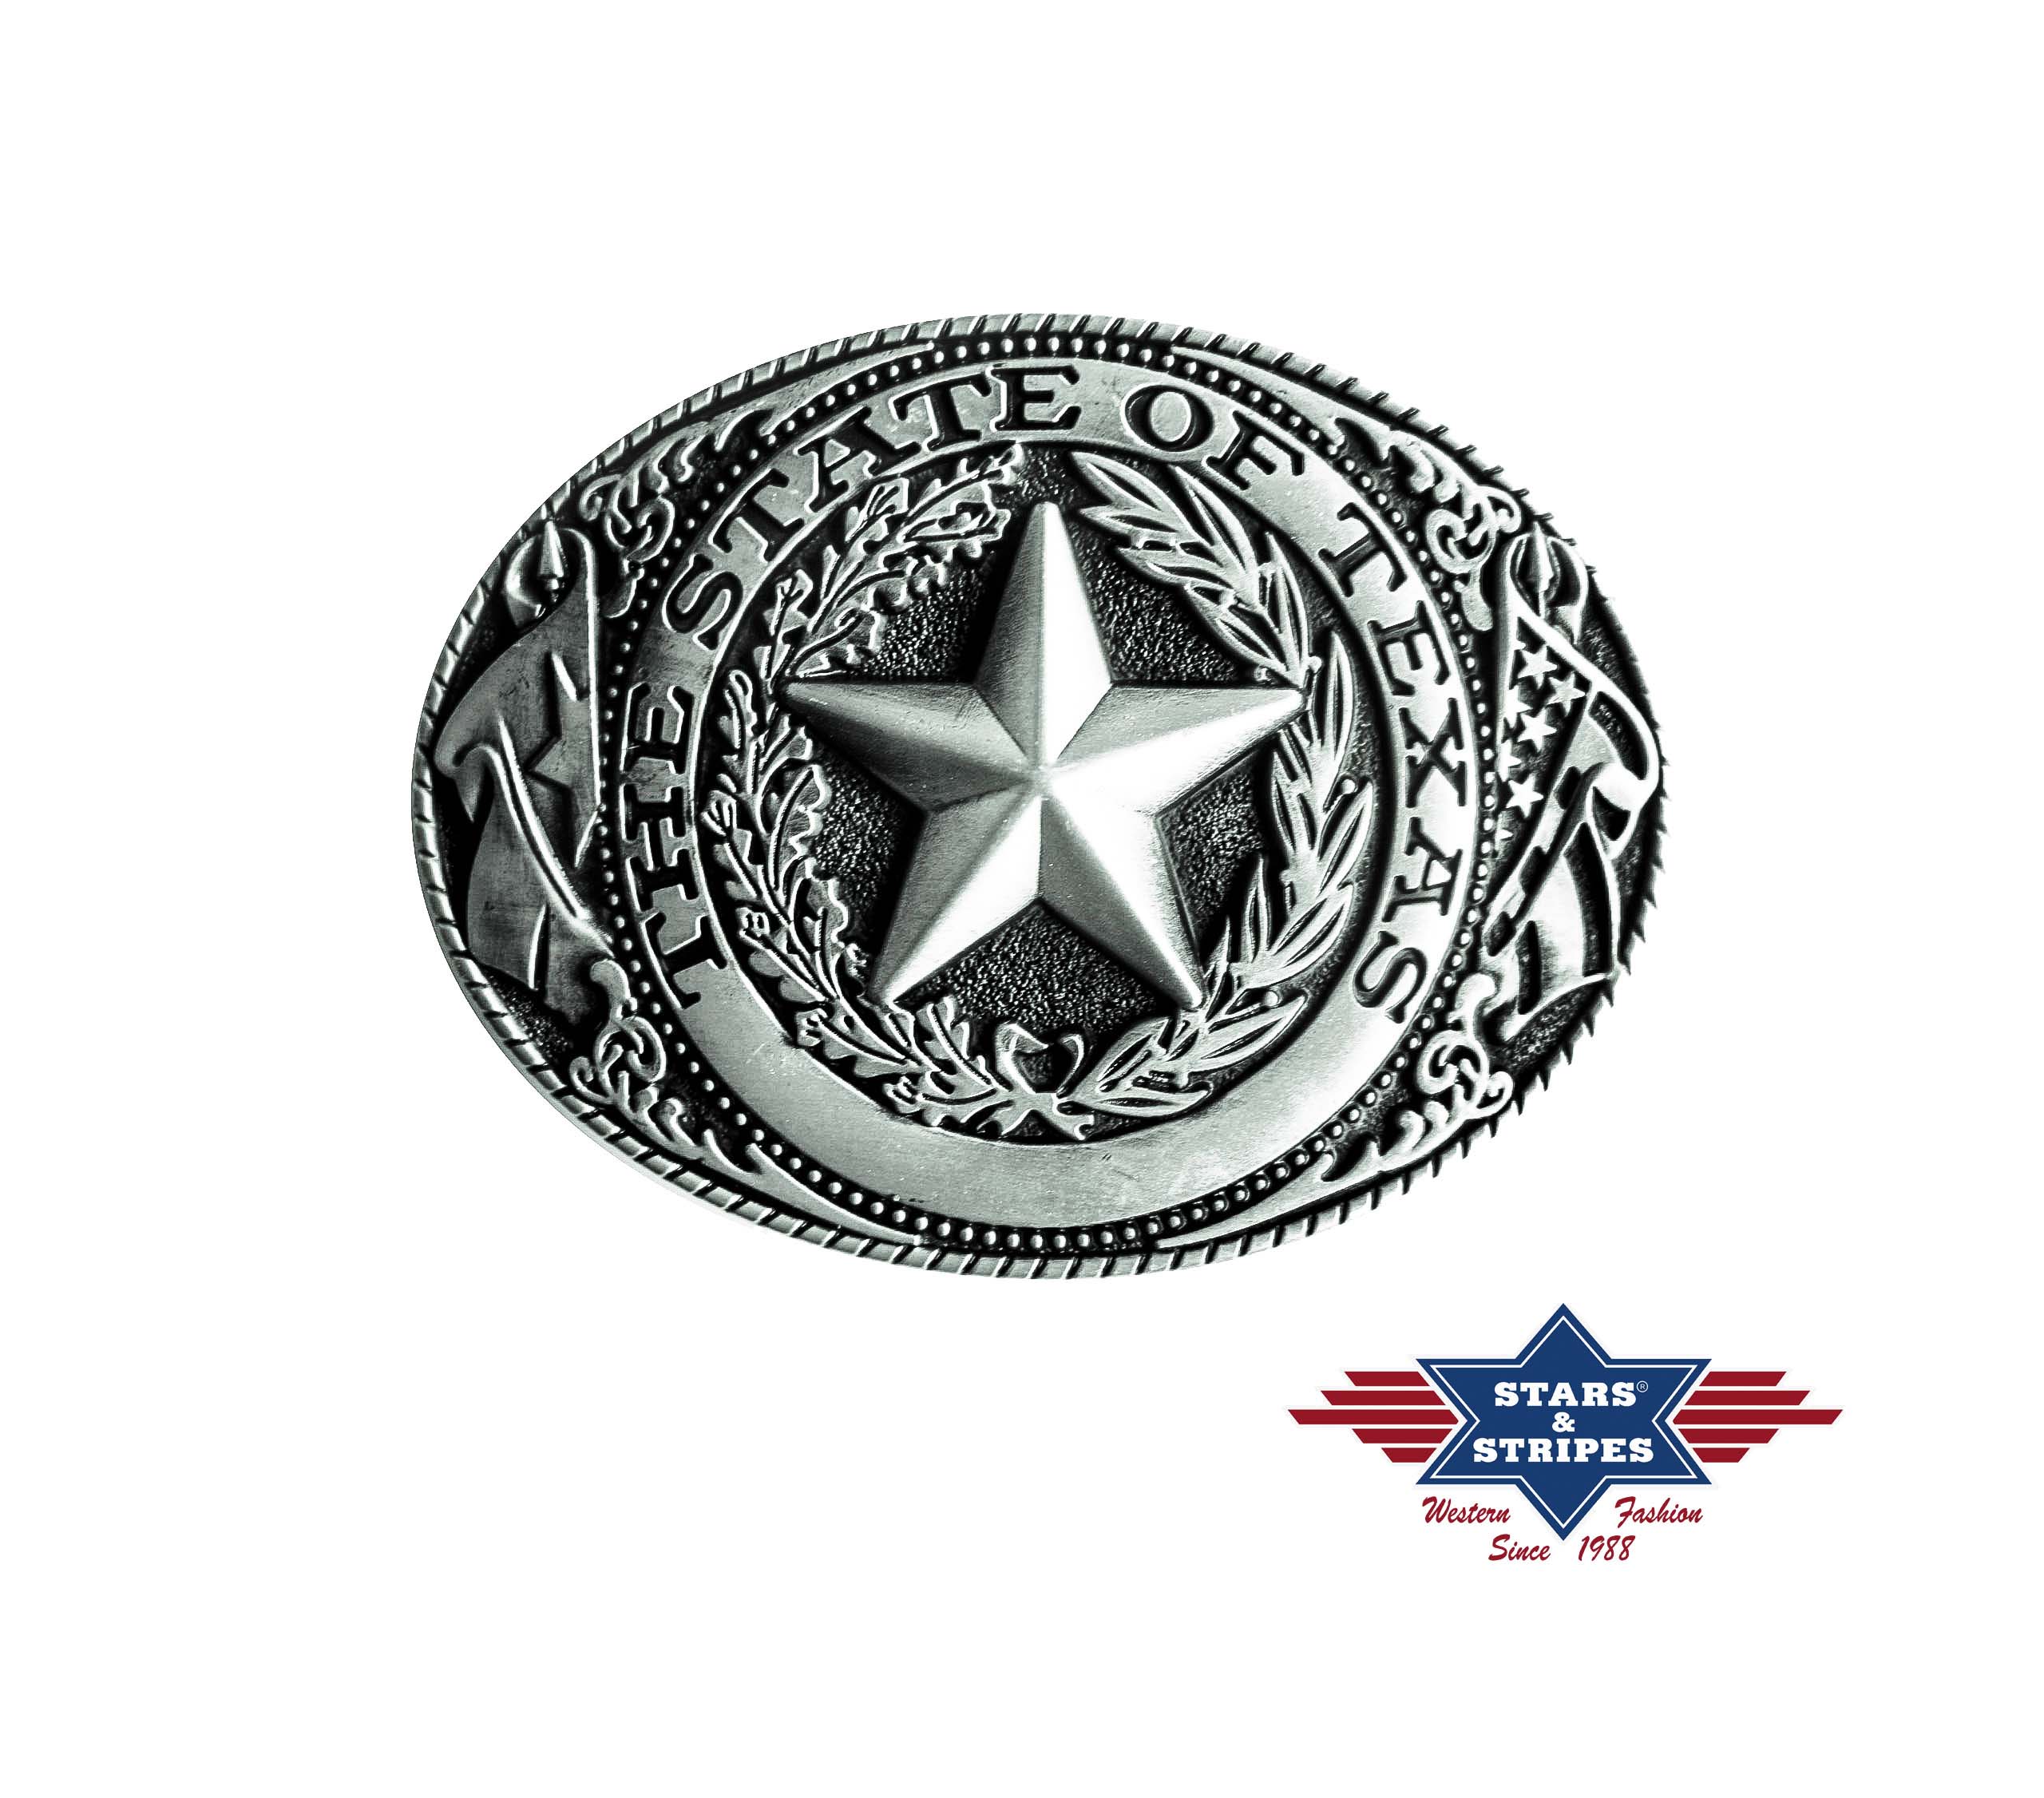 Westernbuckle belt buckle Texas star